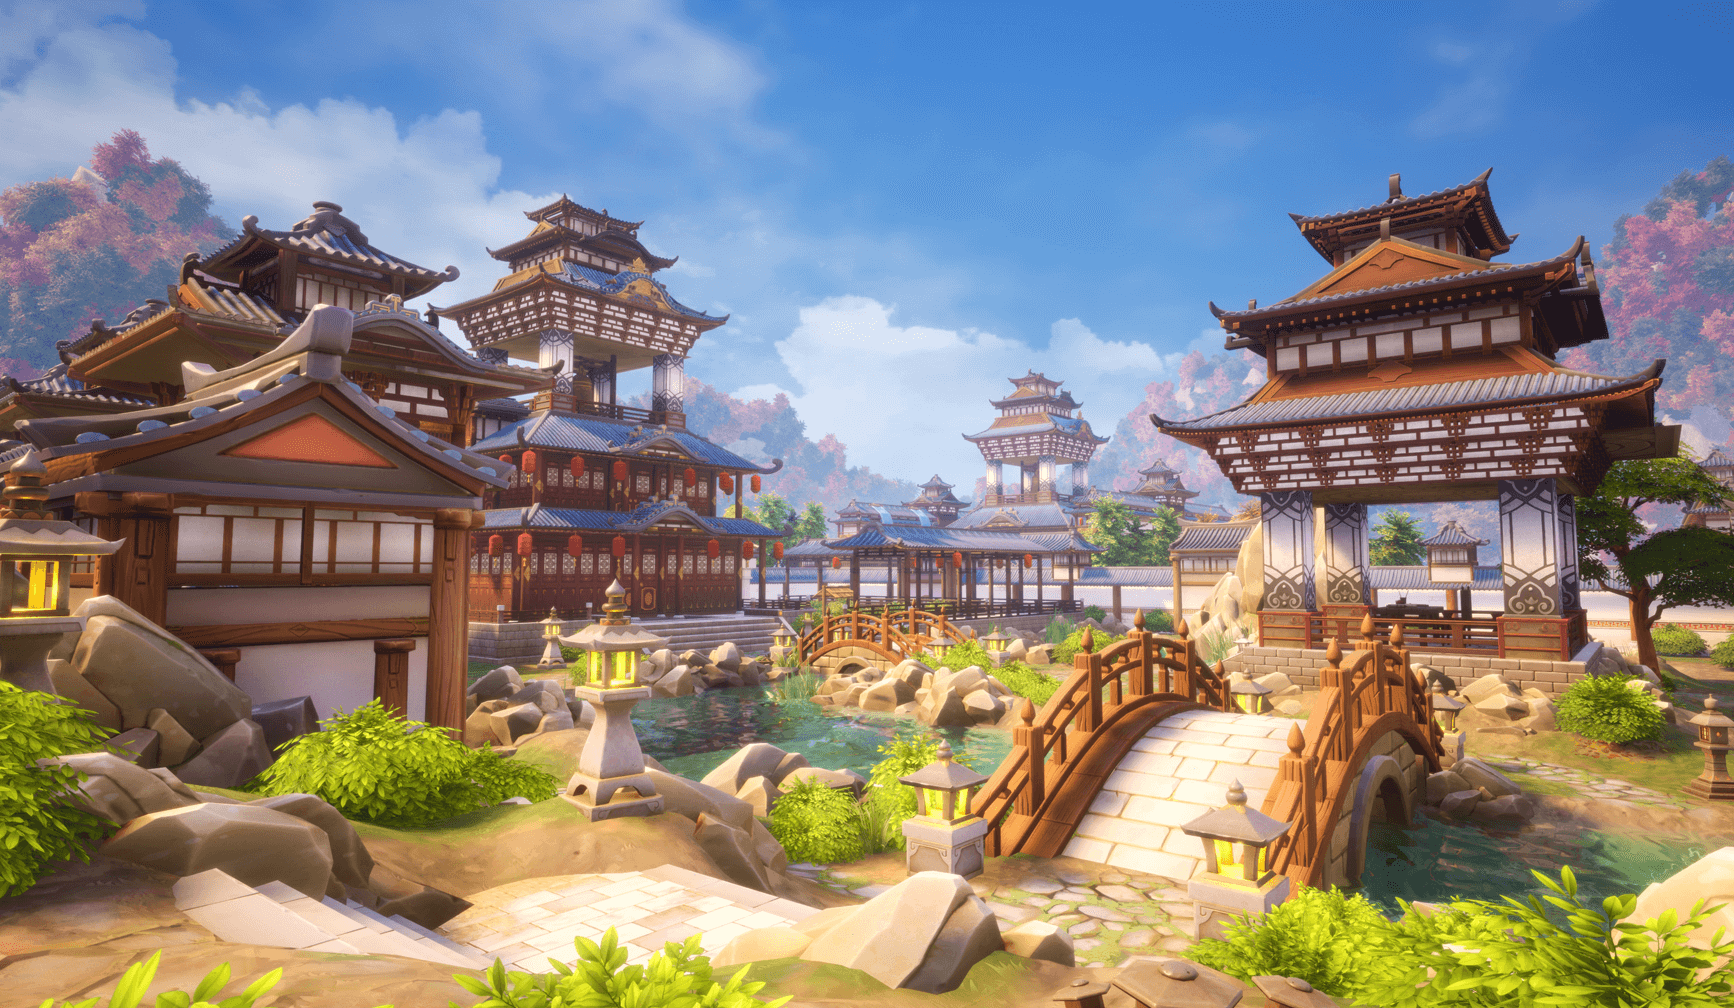 【UE4/5】风格化中国古代建筑 – Fantasy Asian Palace Asset Pack